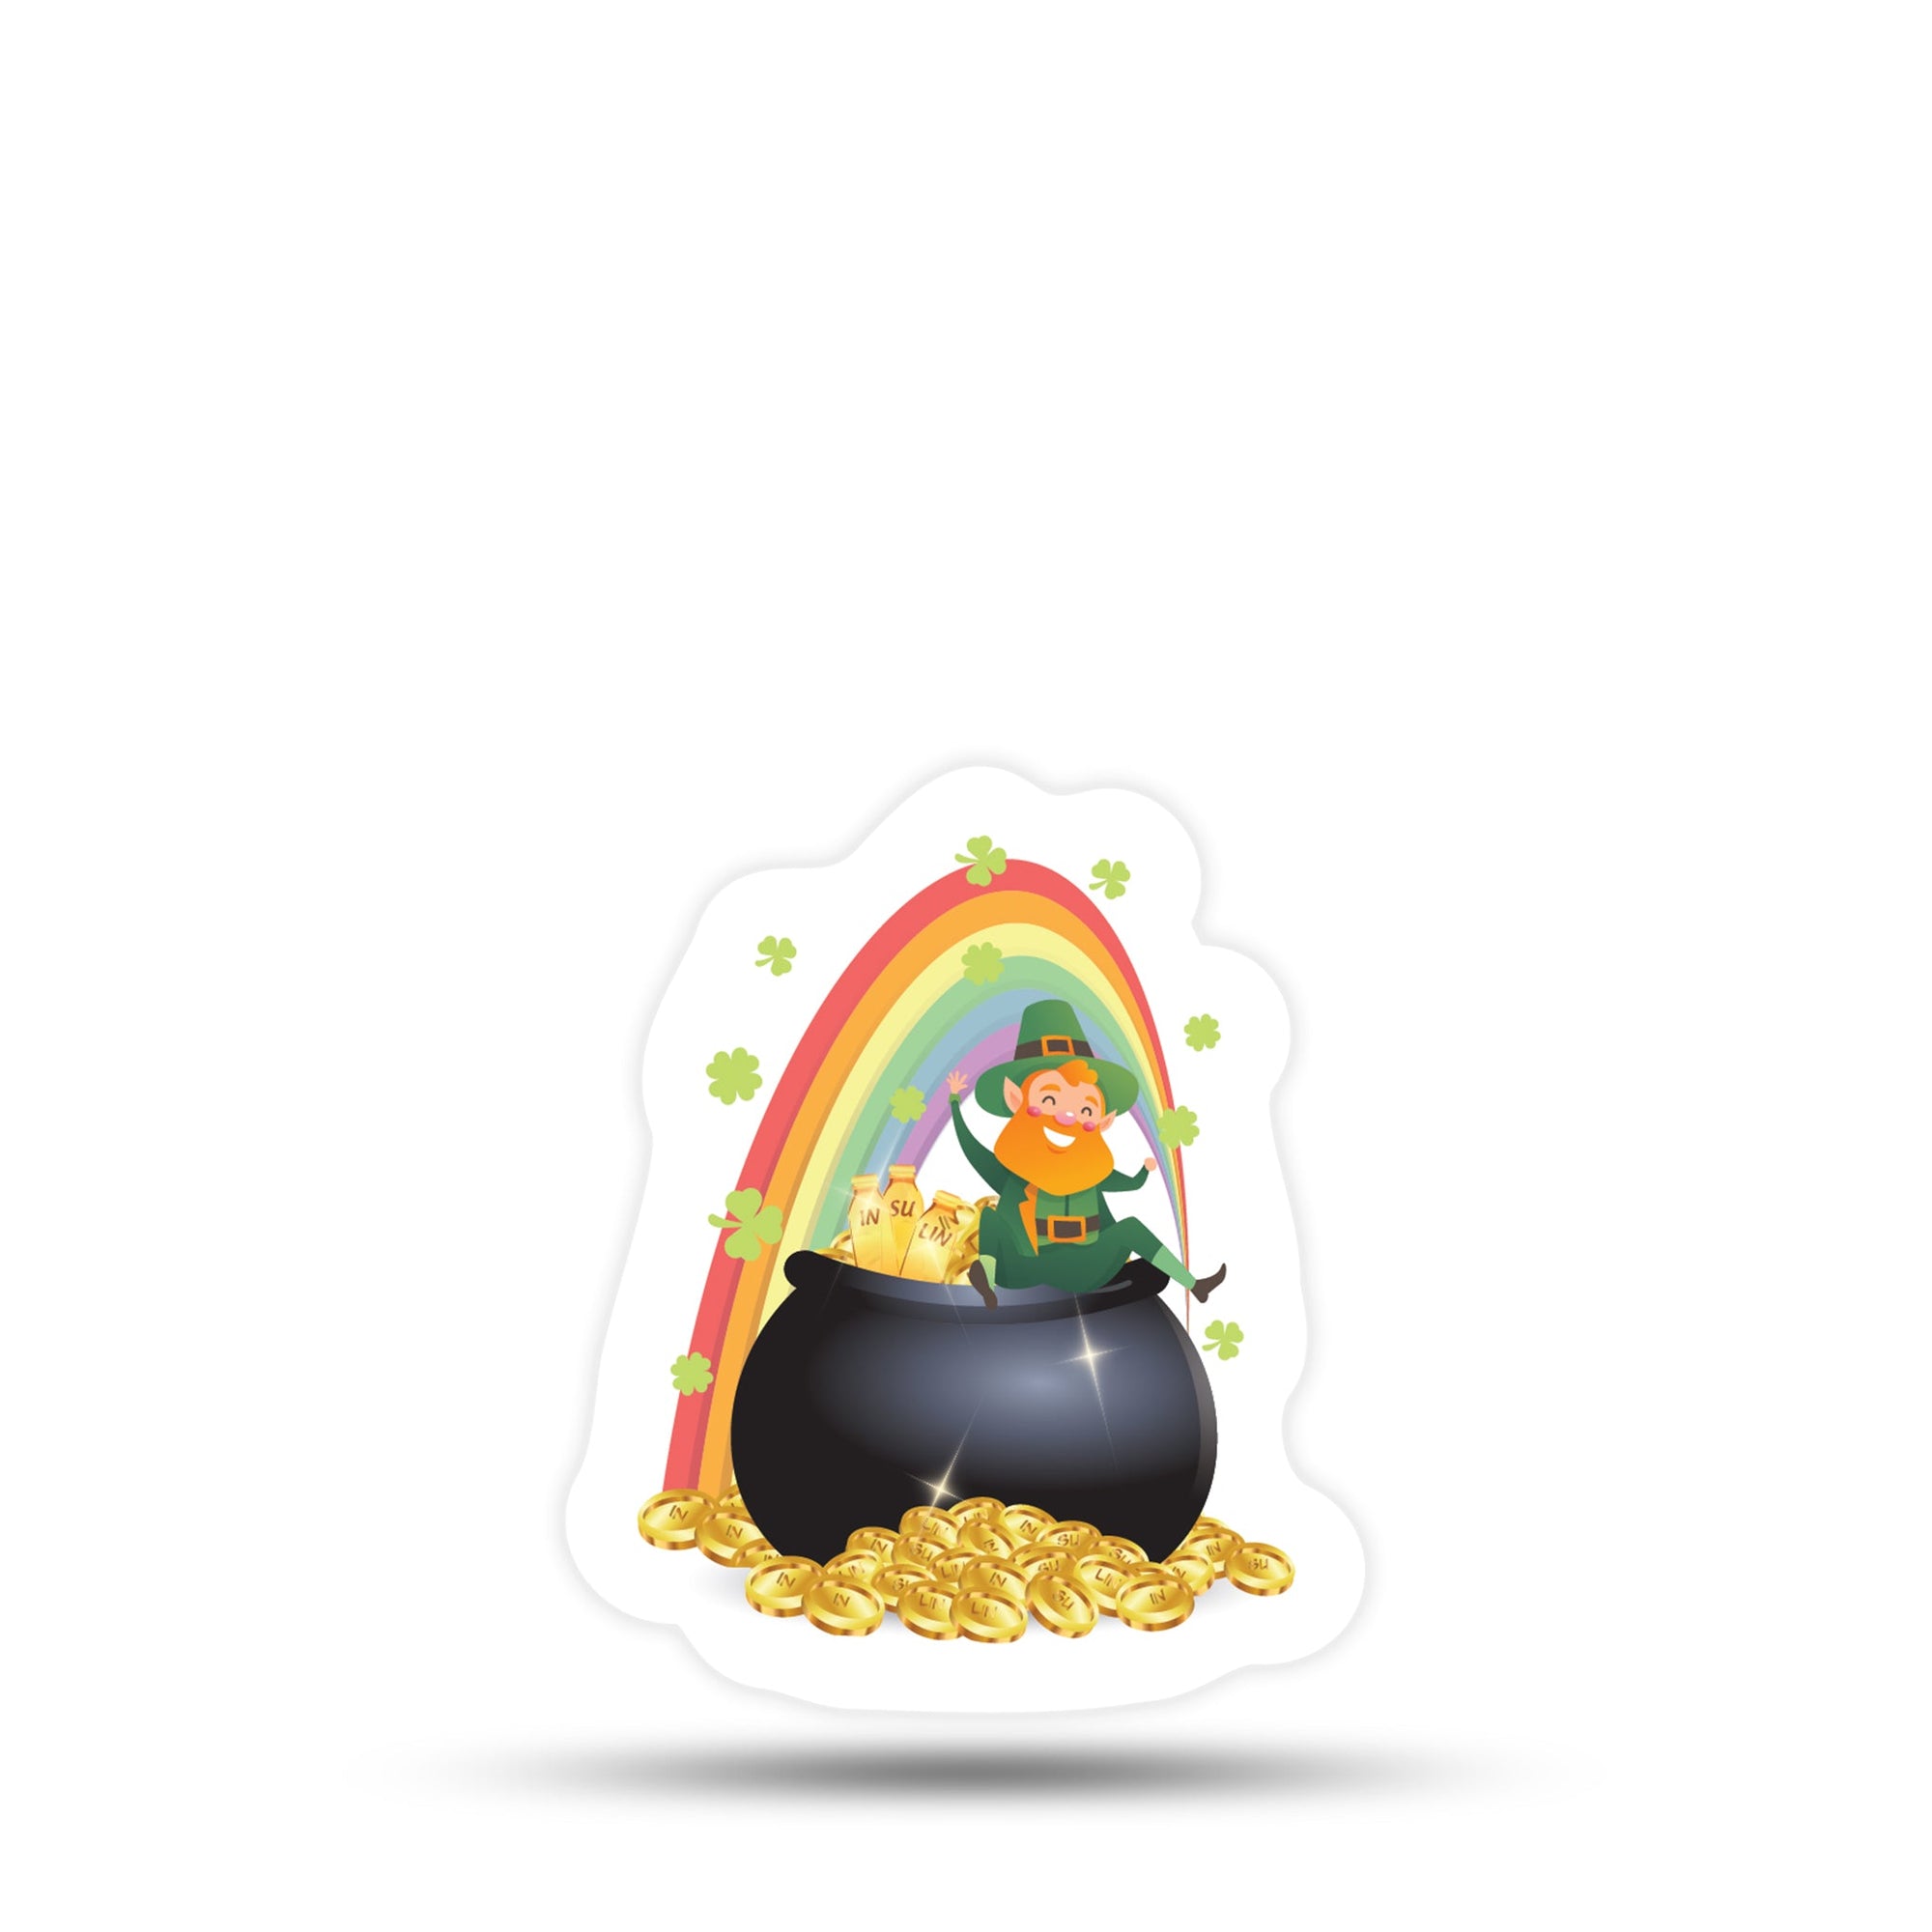 ExpressionMed Pot of Gold Decal Sticker, Single Sticker, Pot of Gold over the rainbow leprechaun Insulin sticker design